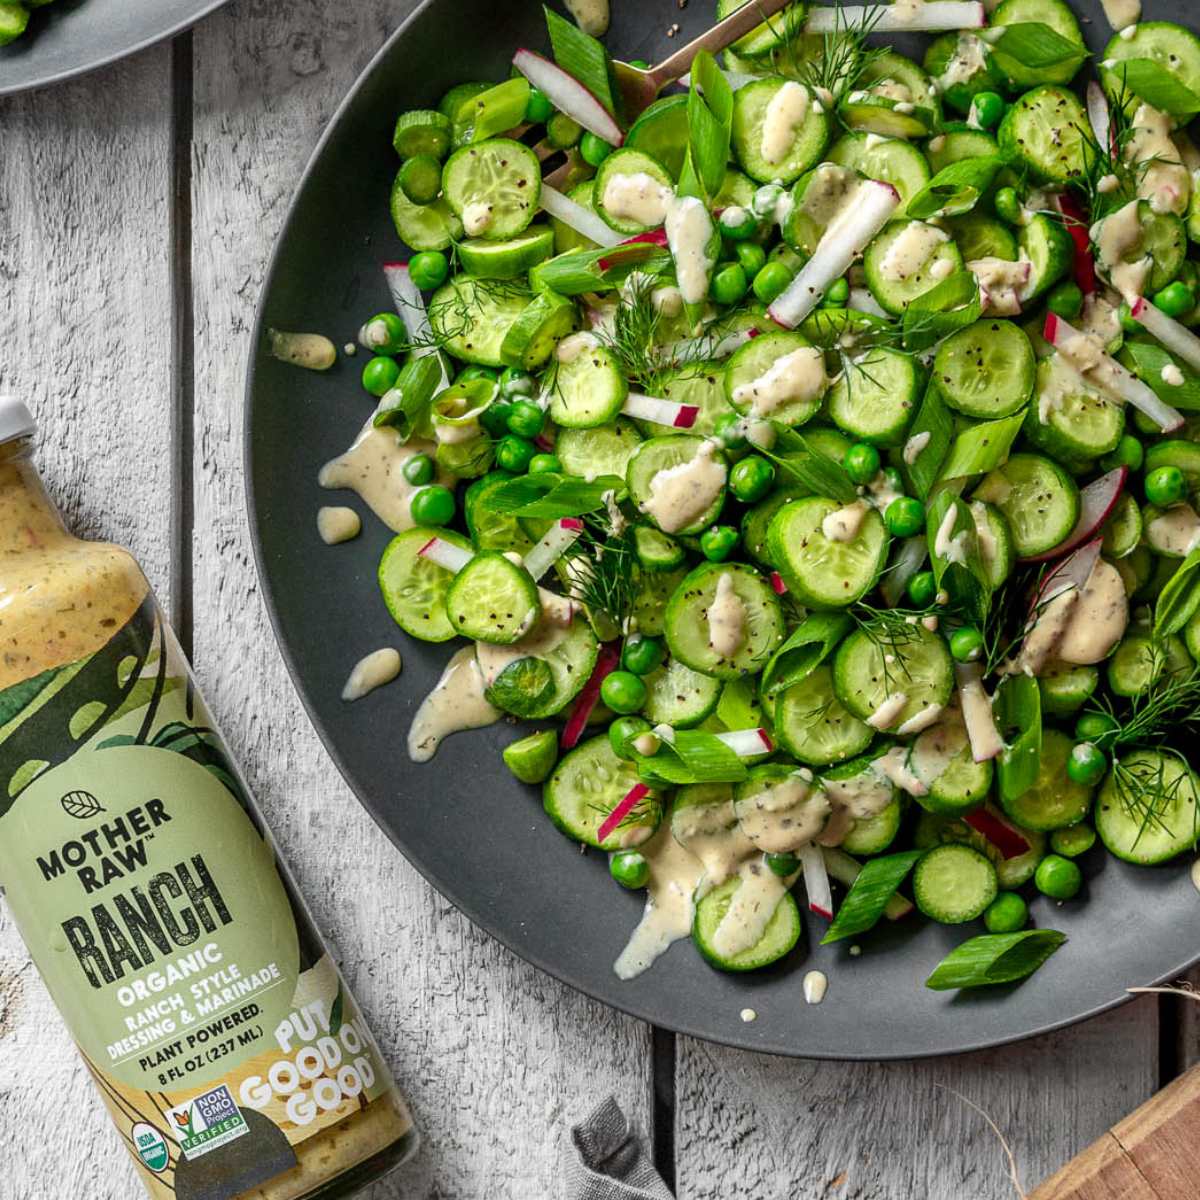 Mother Raw Organic Vegan Ranch Dressing on Cucumber Salad